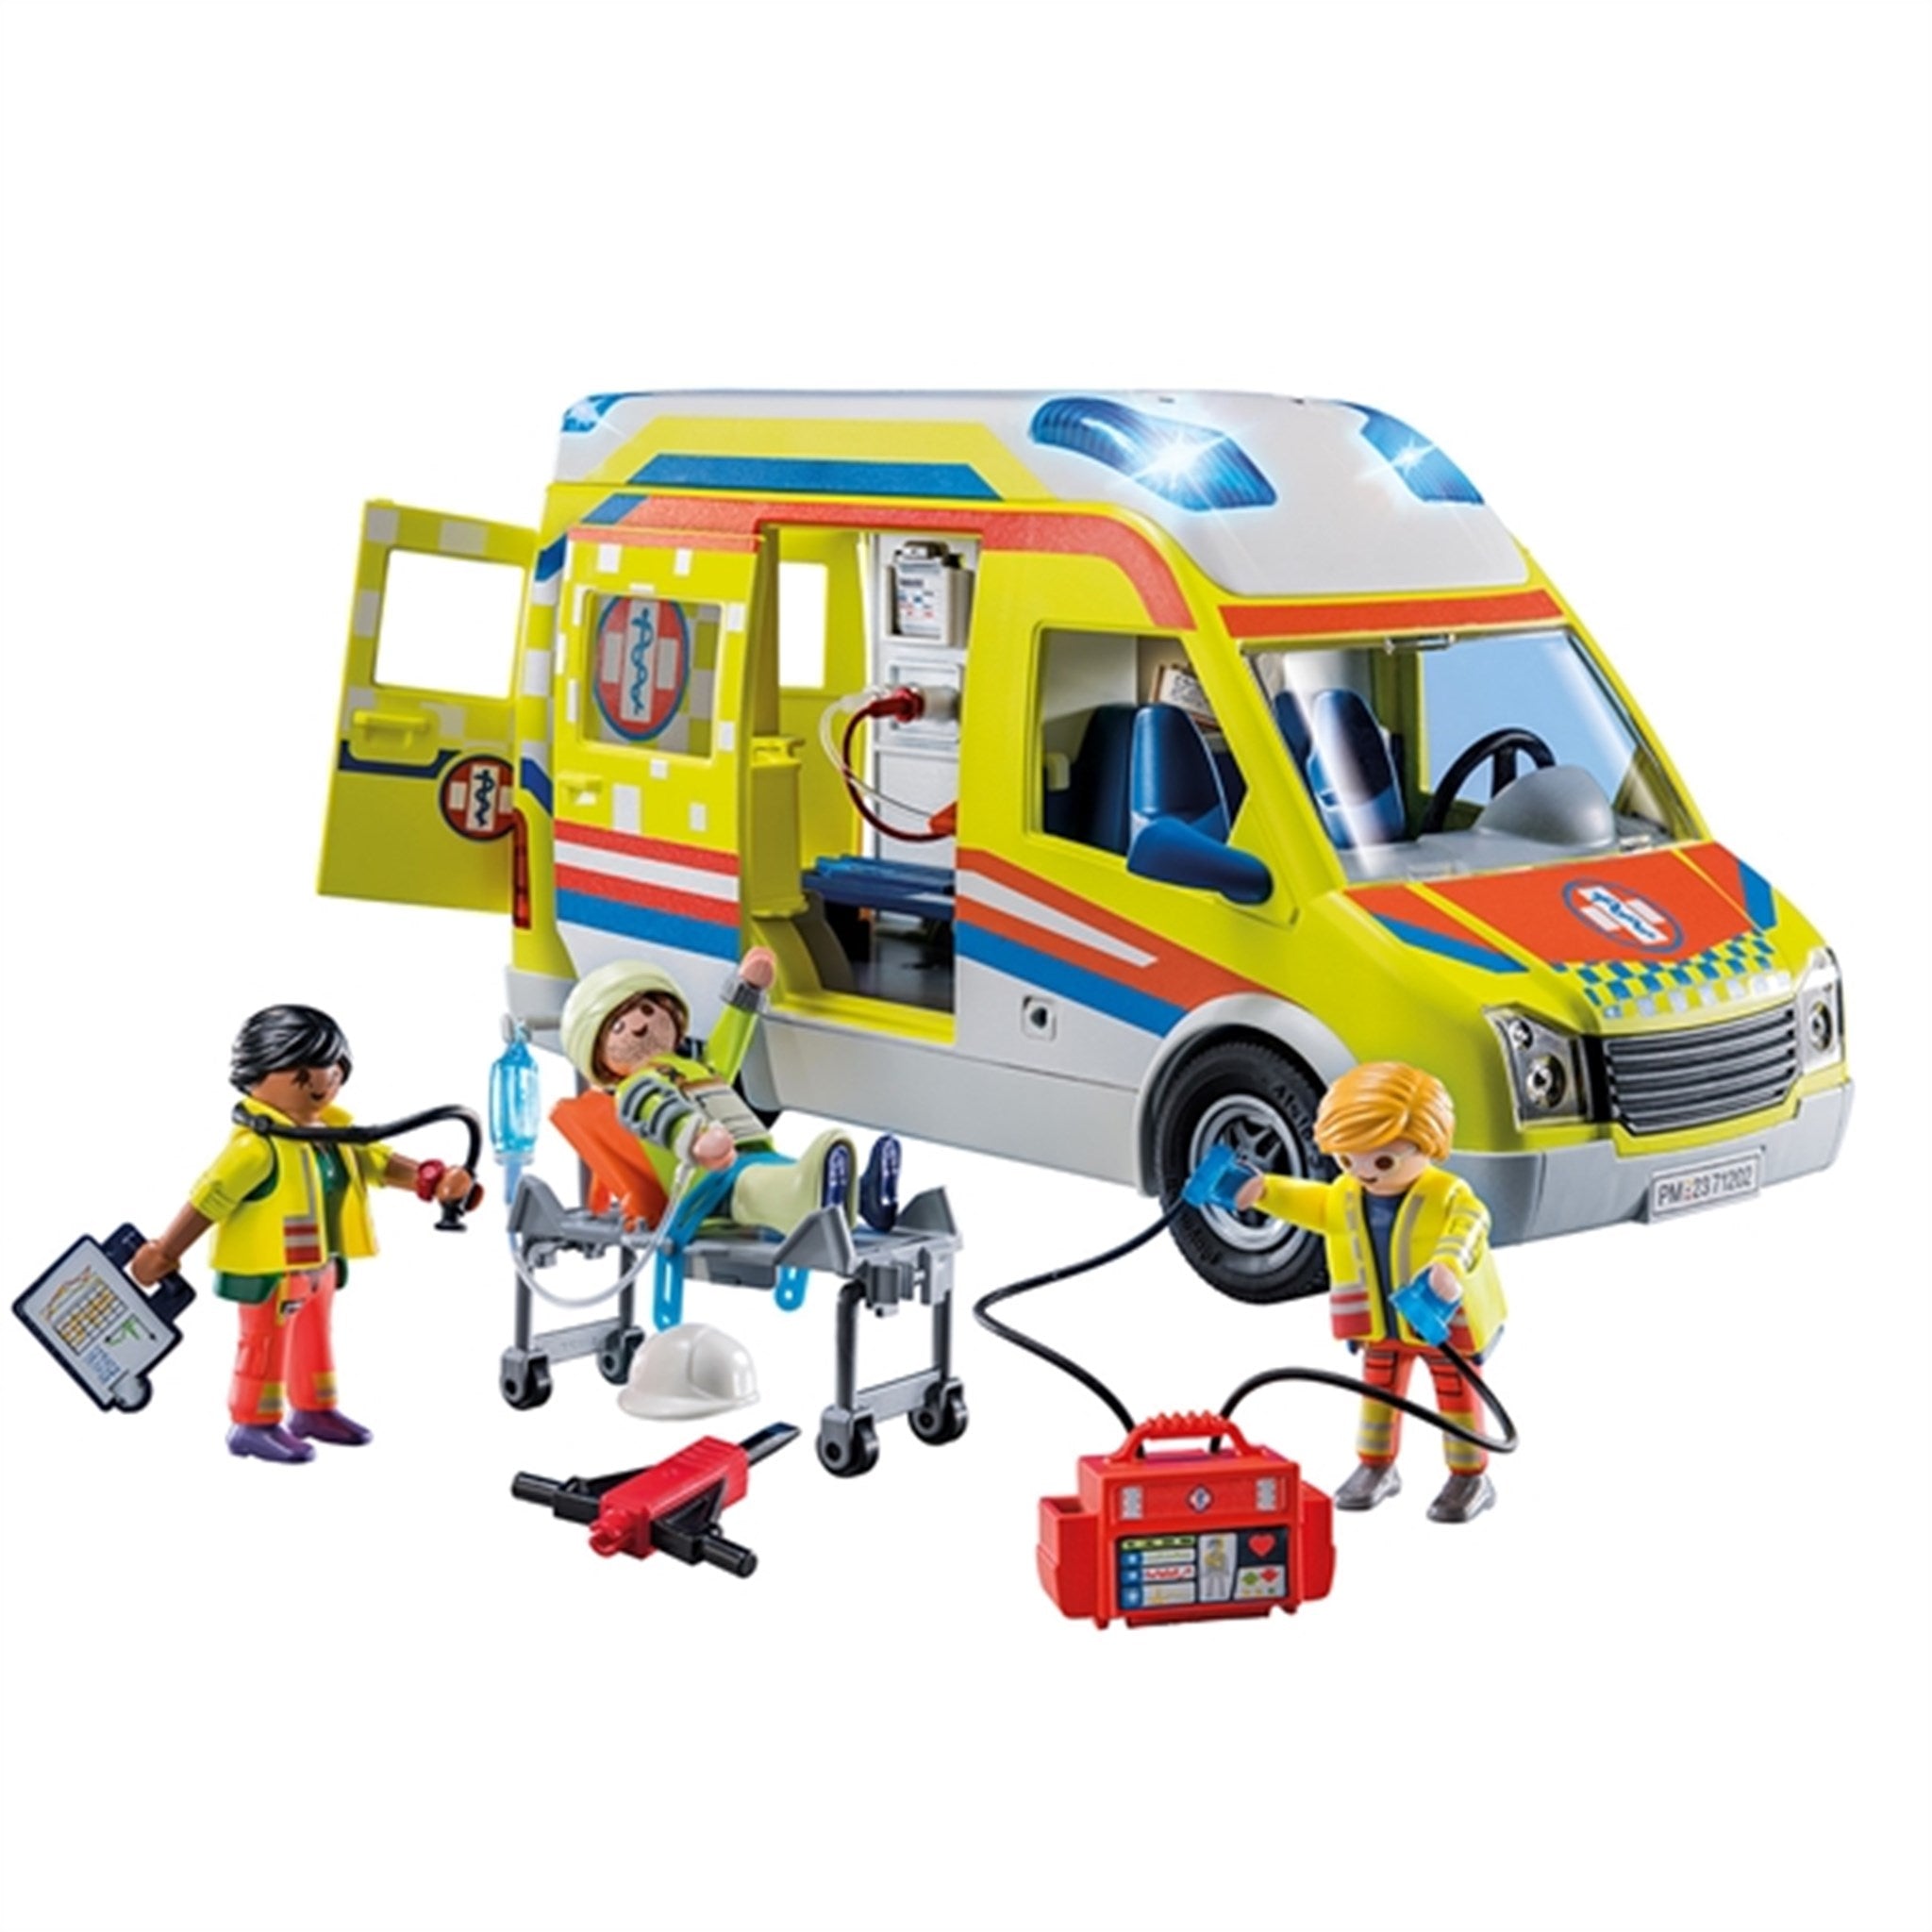 Playmobil® City Life - Ambulance with Light and Sound 6